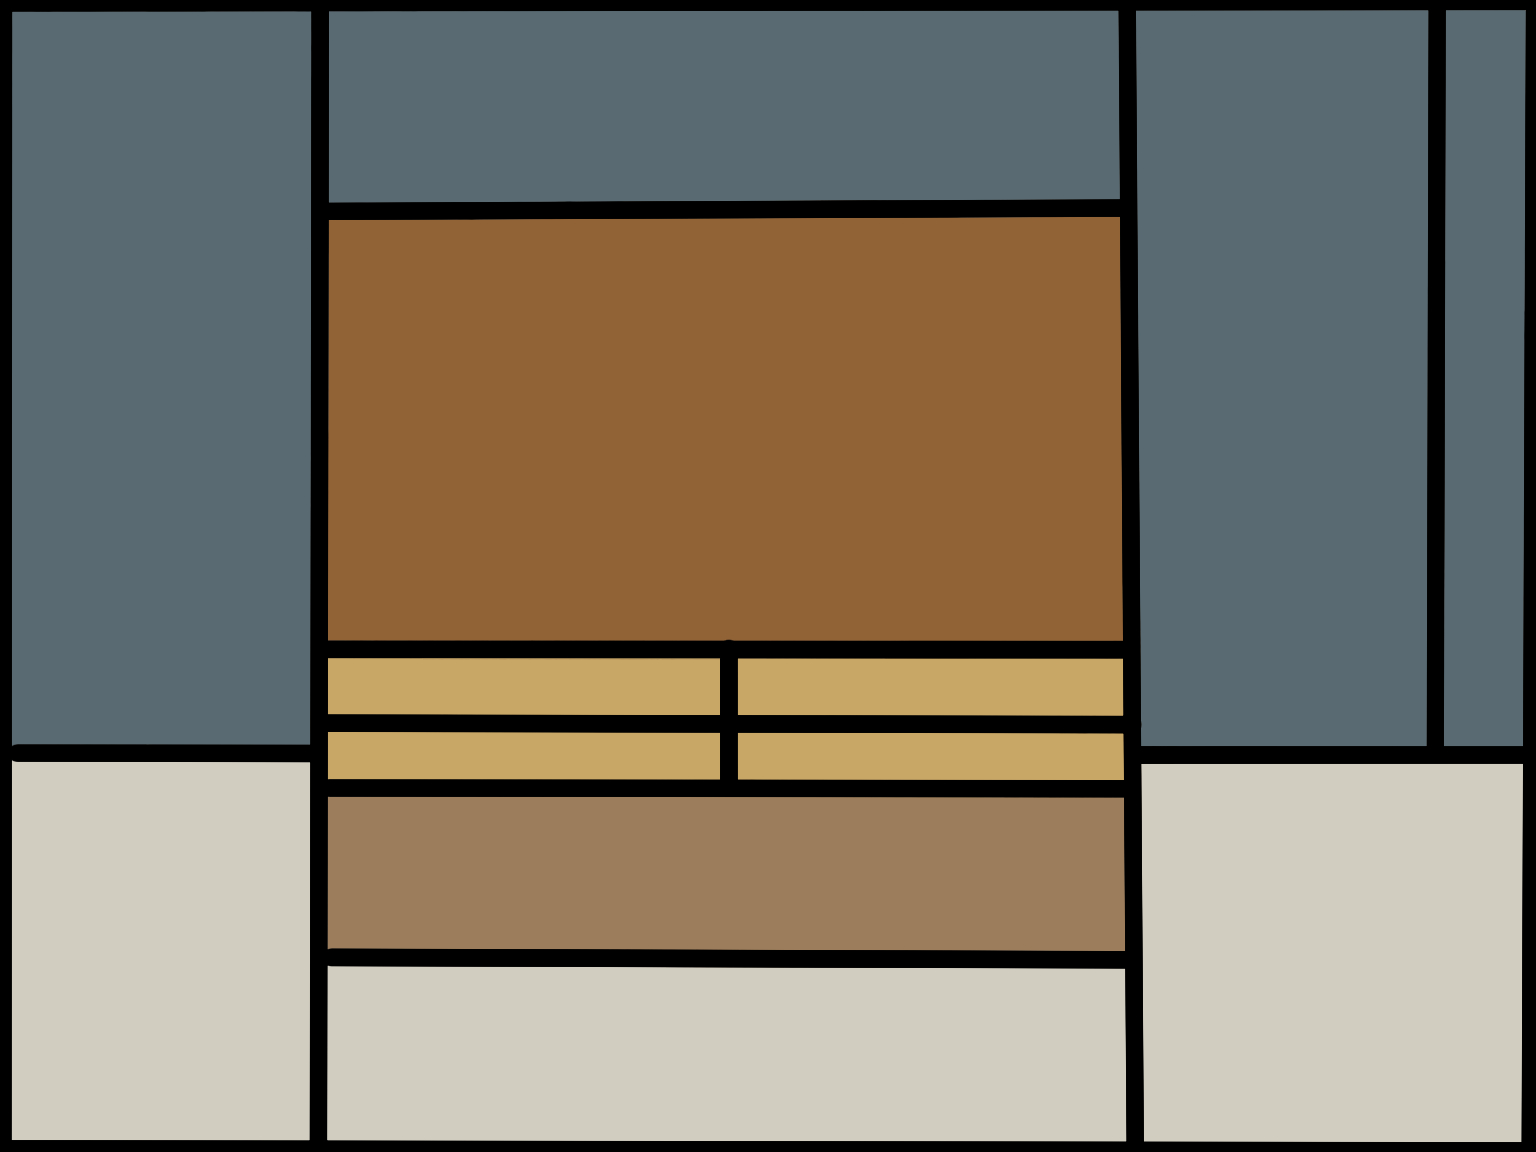 Mondrian-style artwork of a brown crisp sandwich